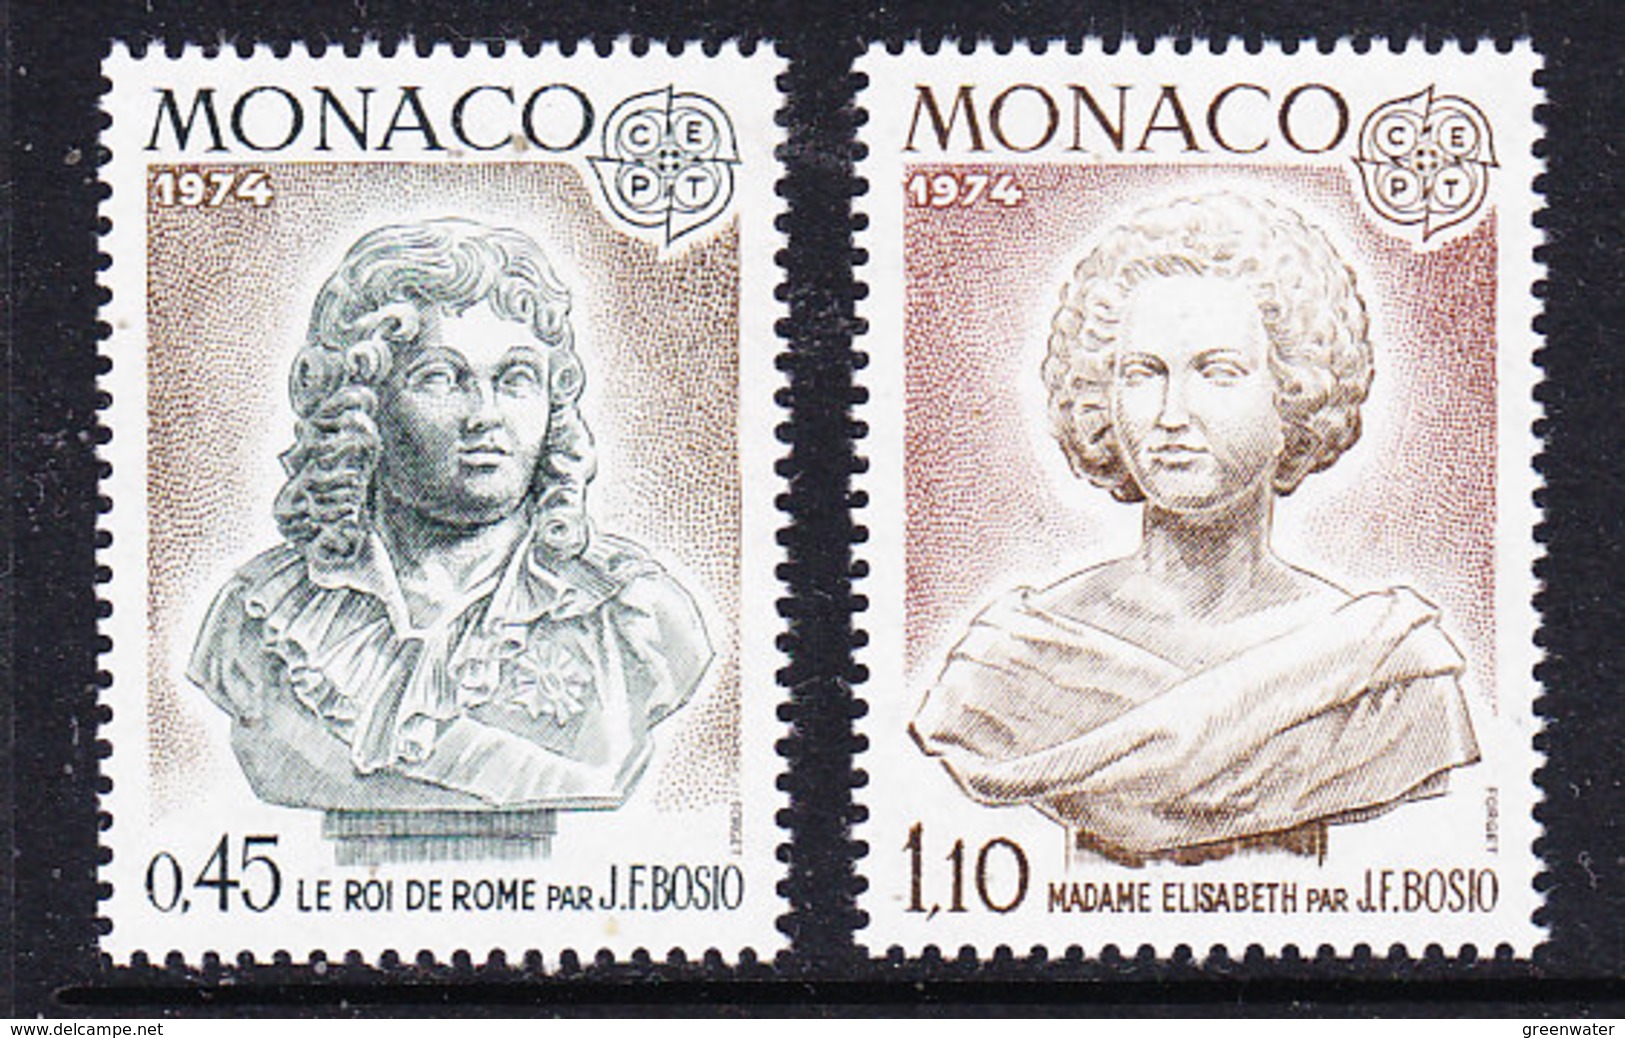 Europa Cept 1974 Monaco 2v ** Mnh (36922A) - 1974